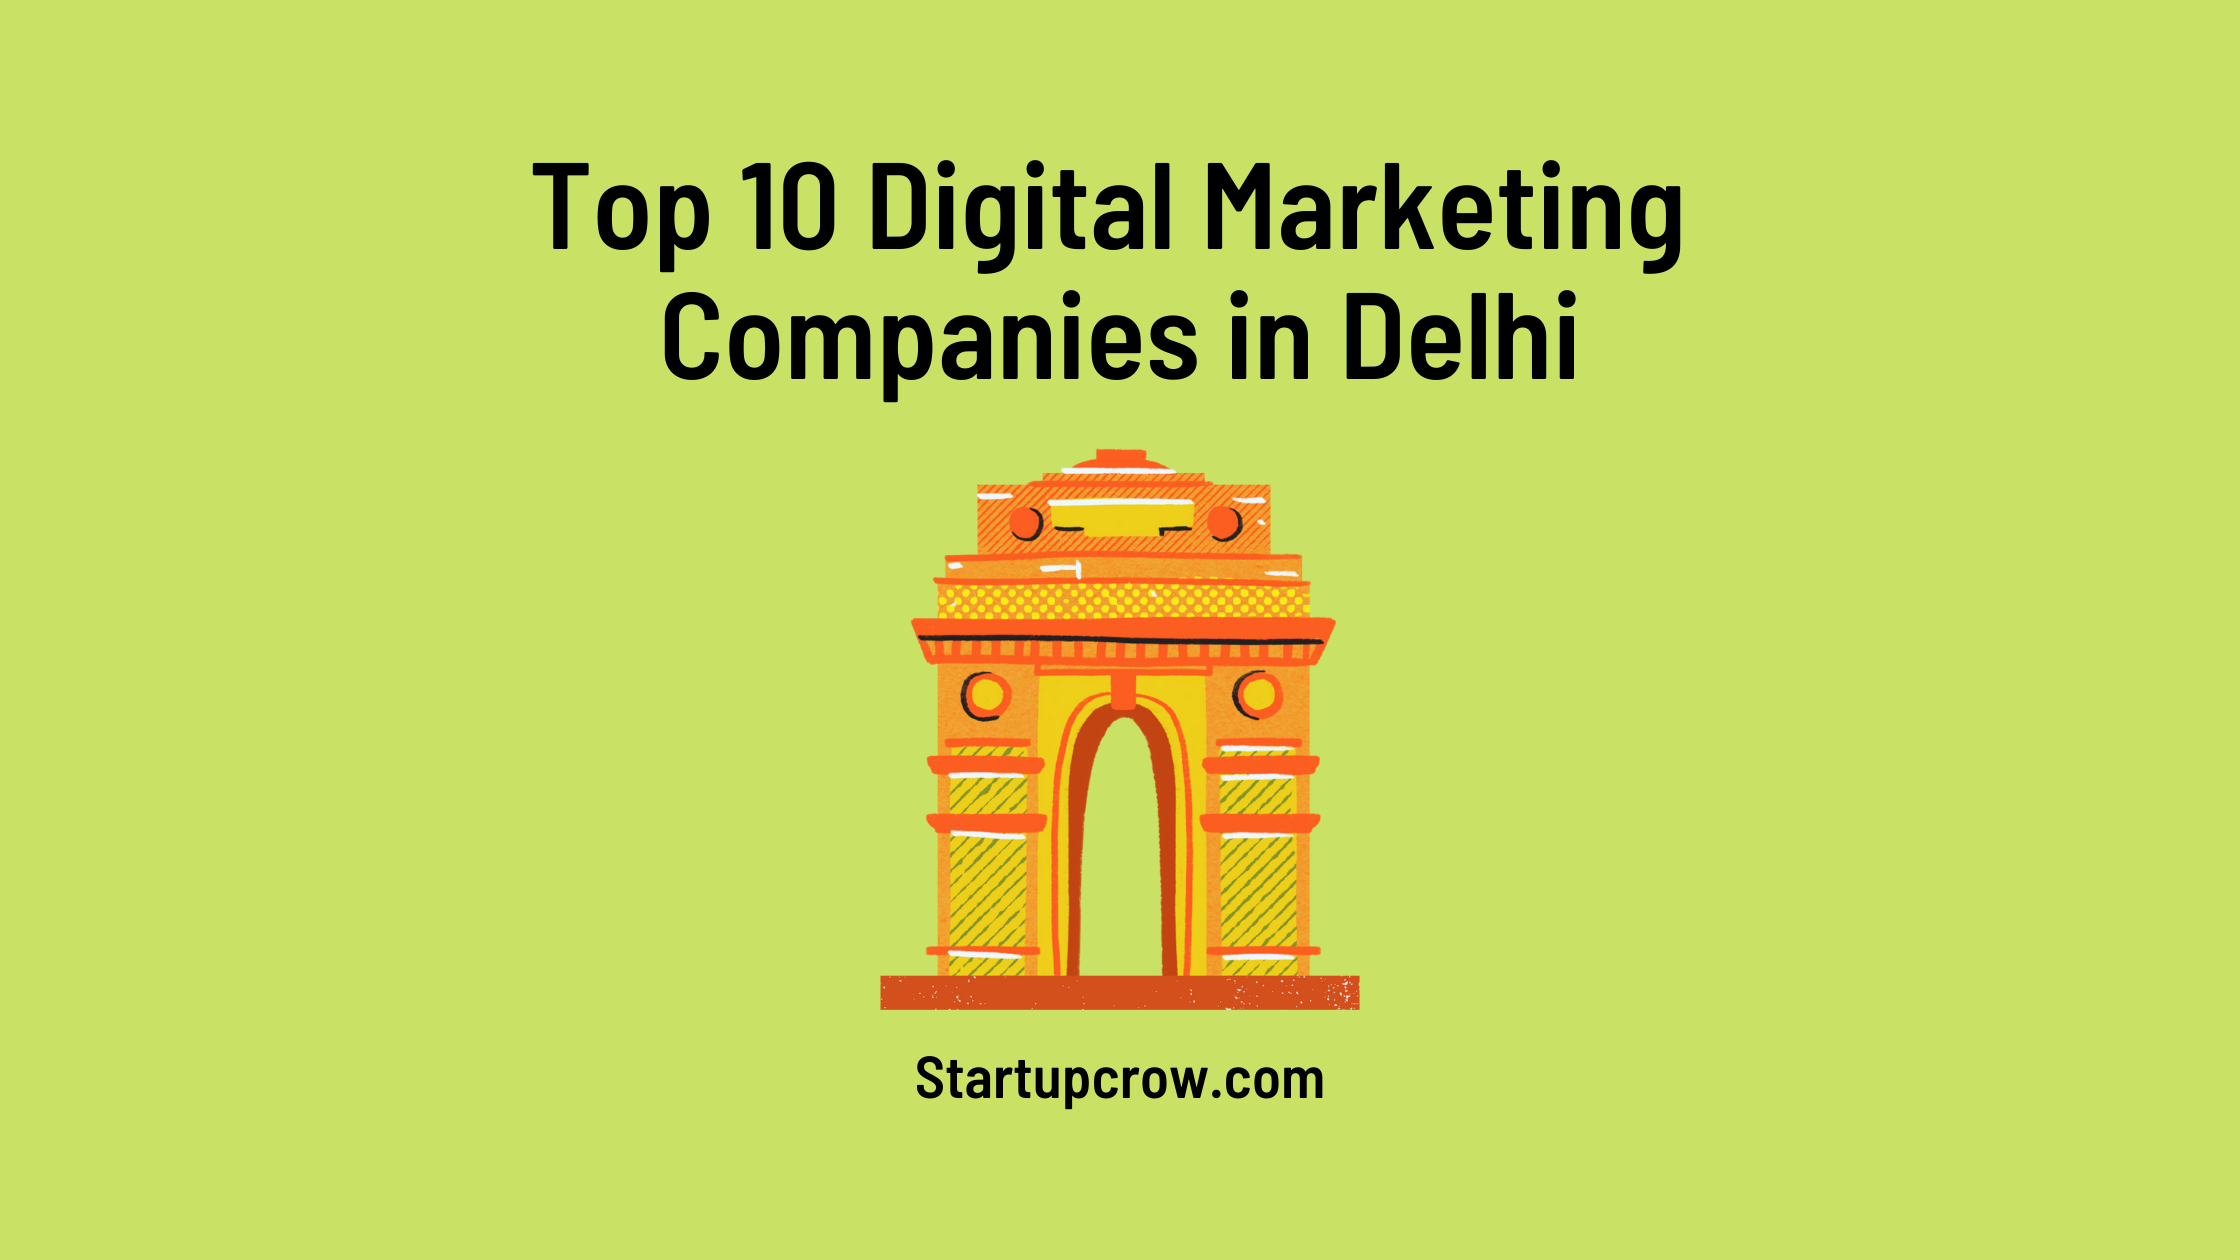 Top 10 Digital Marketing Companies in Delhi